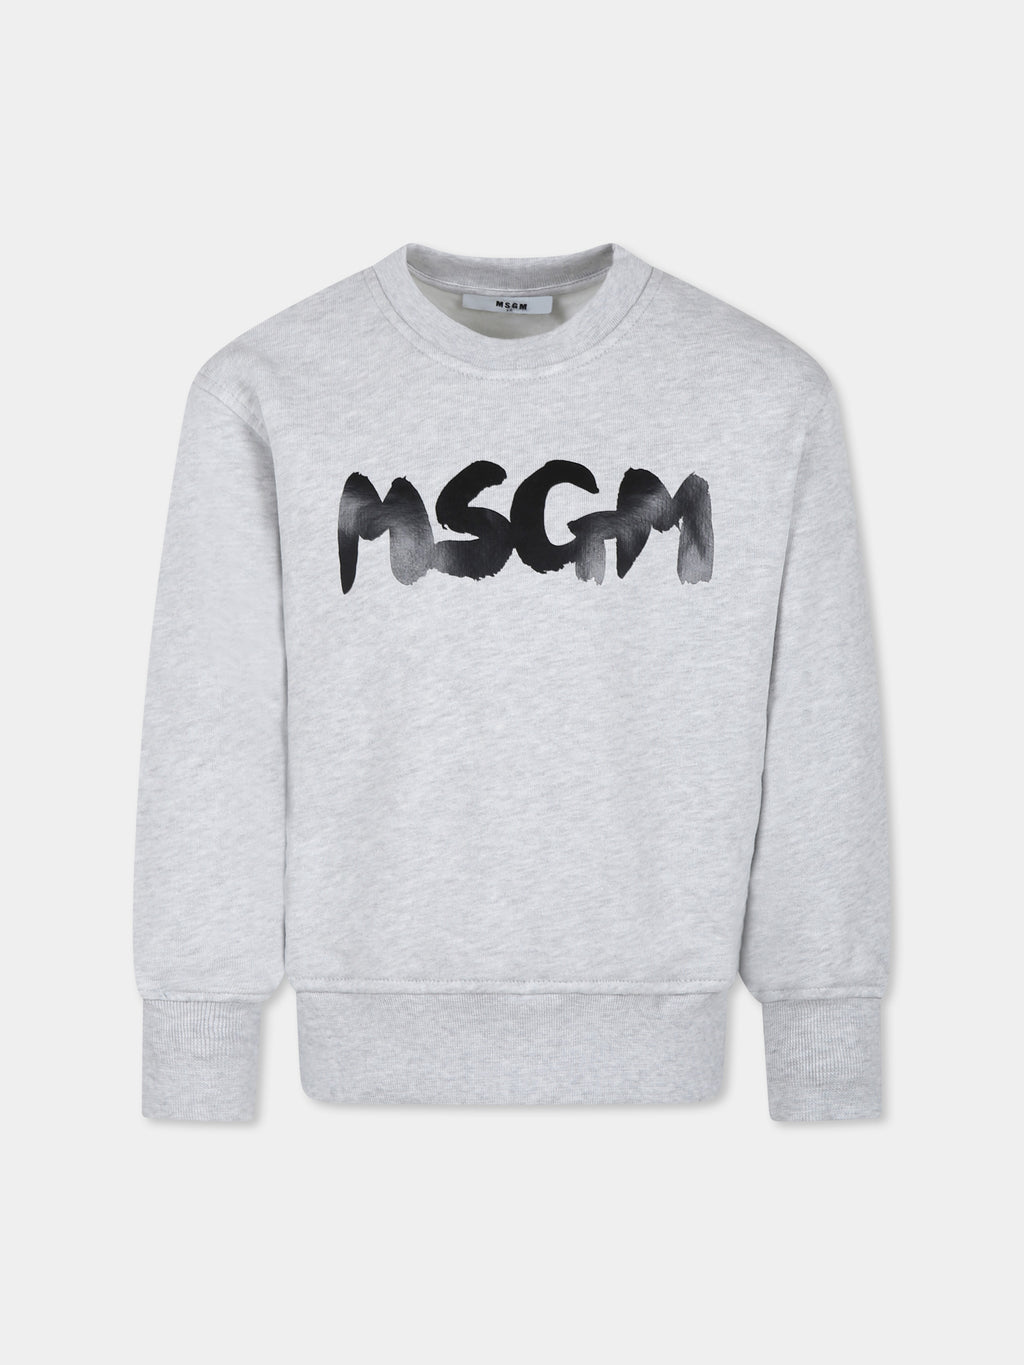 Grey sweatshirt for kids with logo